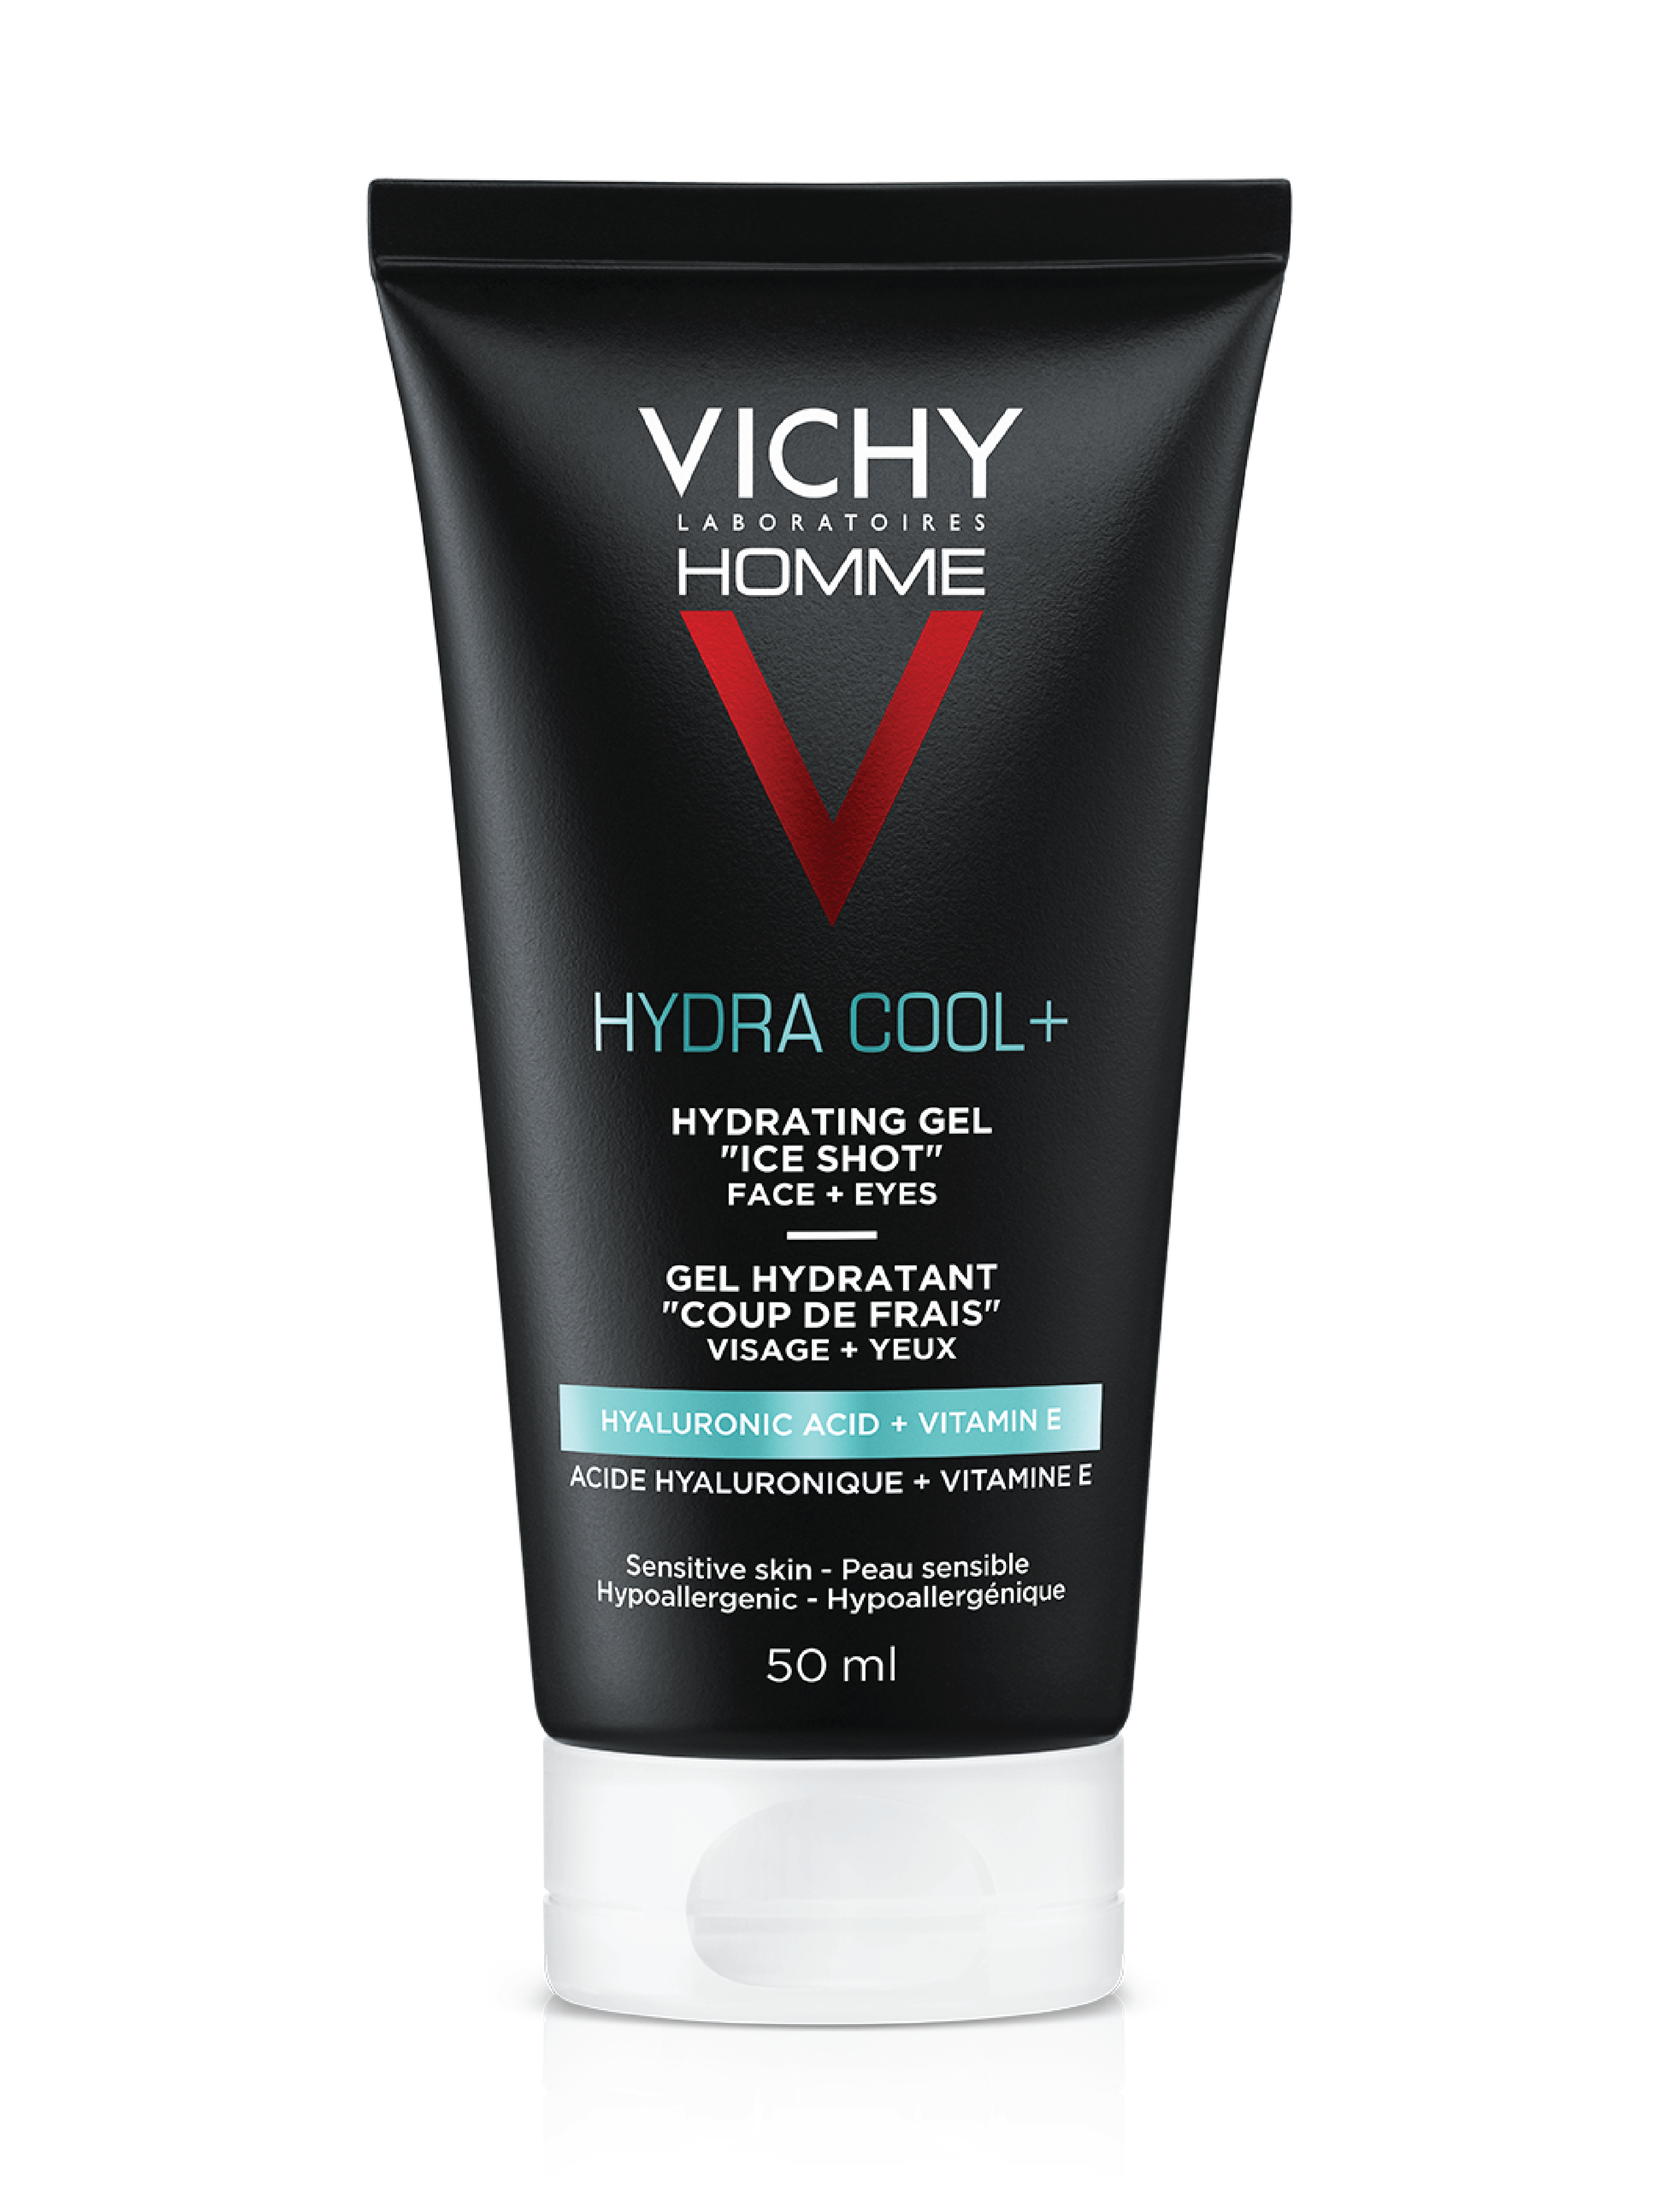 Vichy Homme Hydra Cool+ Moisturiser, 50 ml